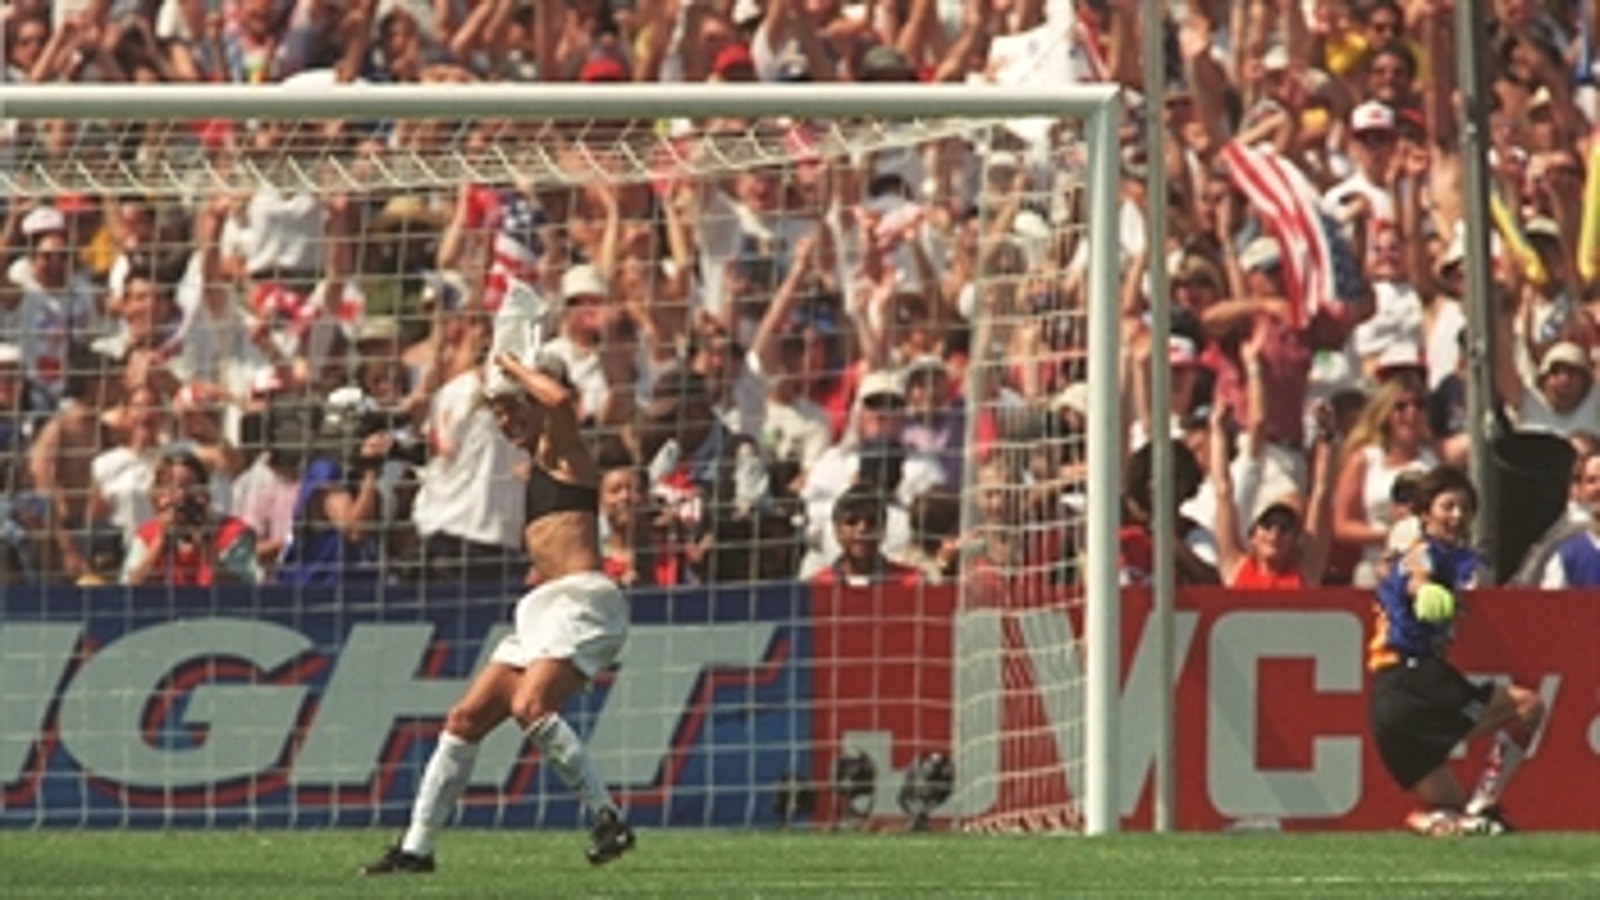 Brandi Chastain's legendary World Cup moment